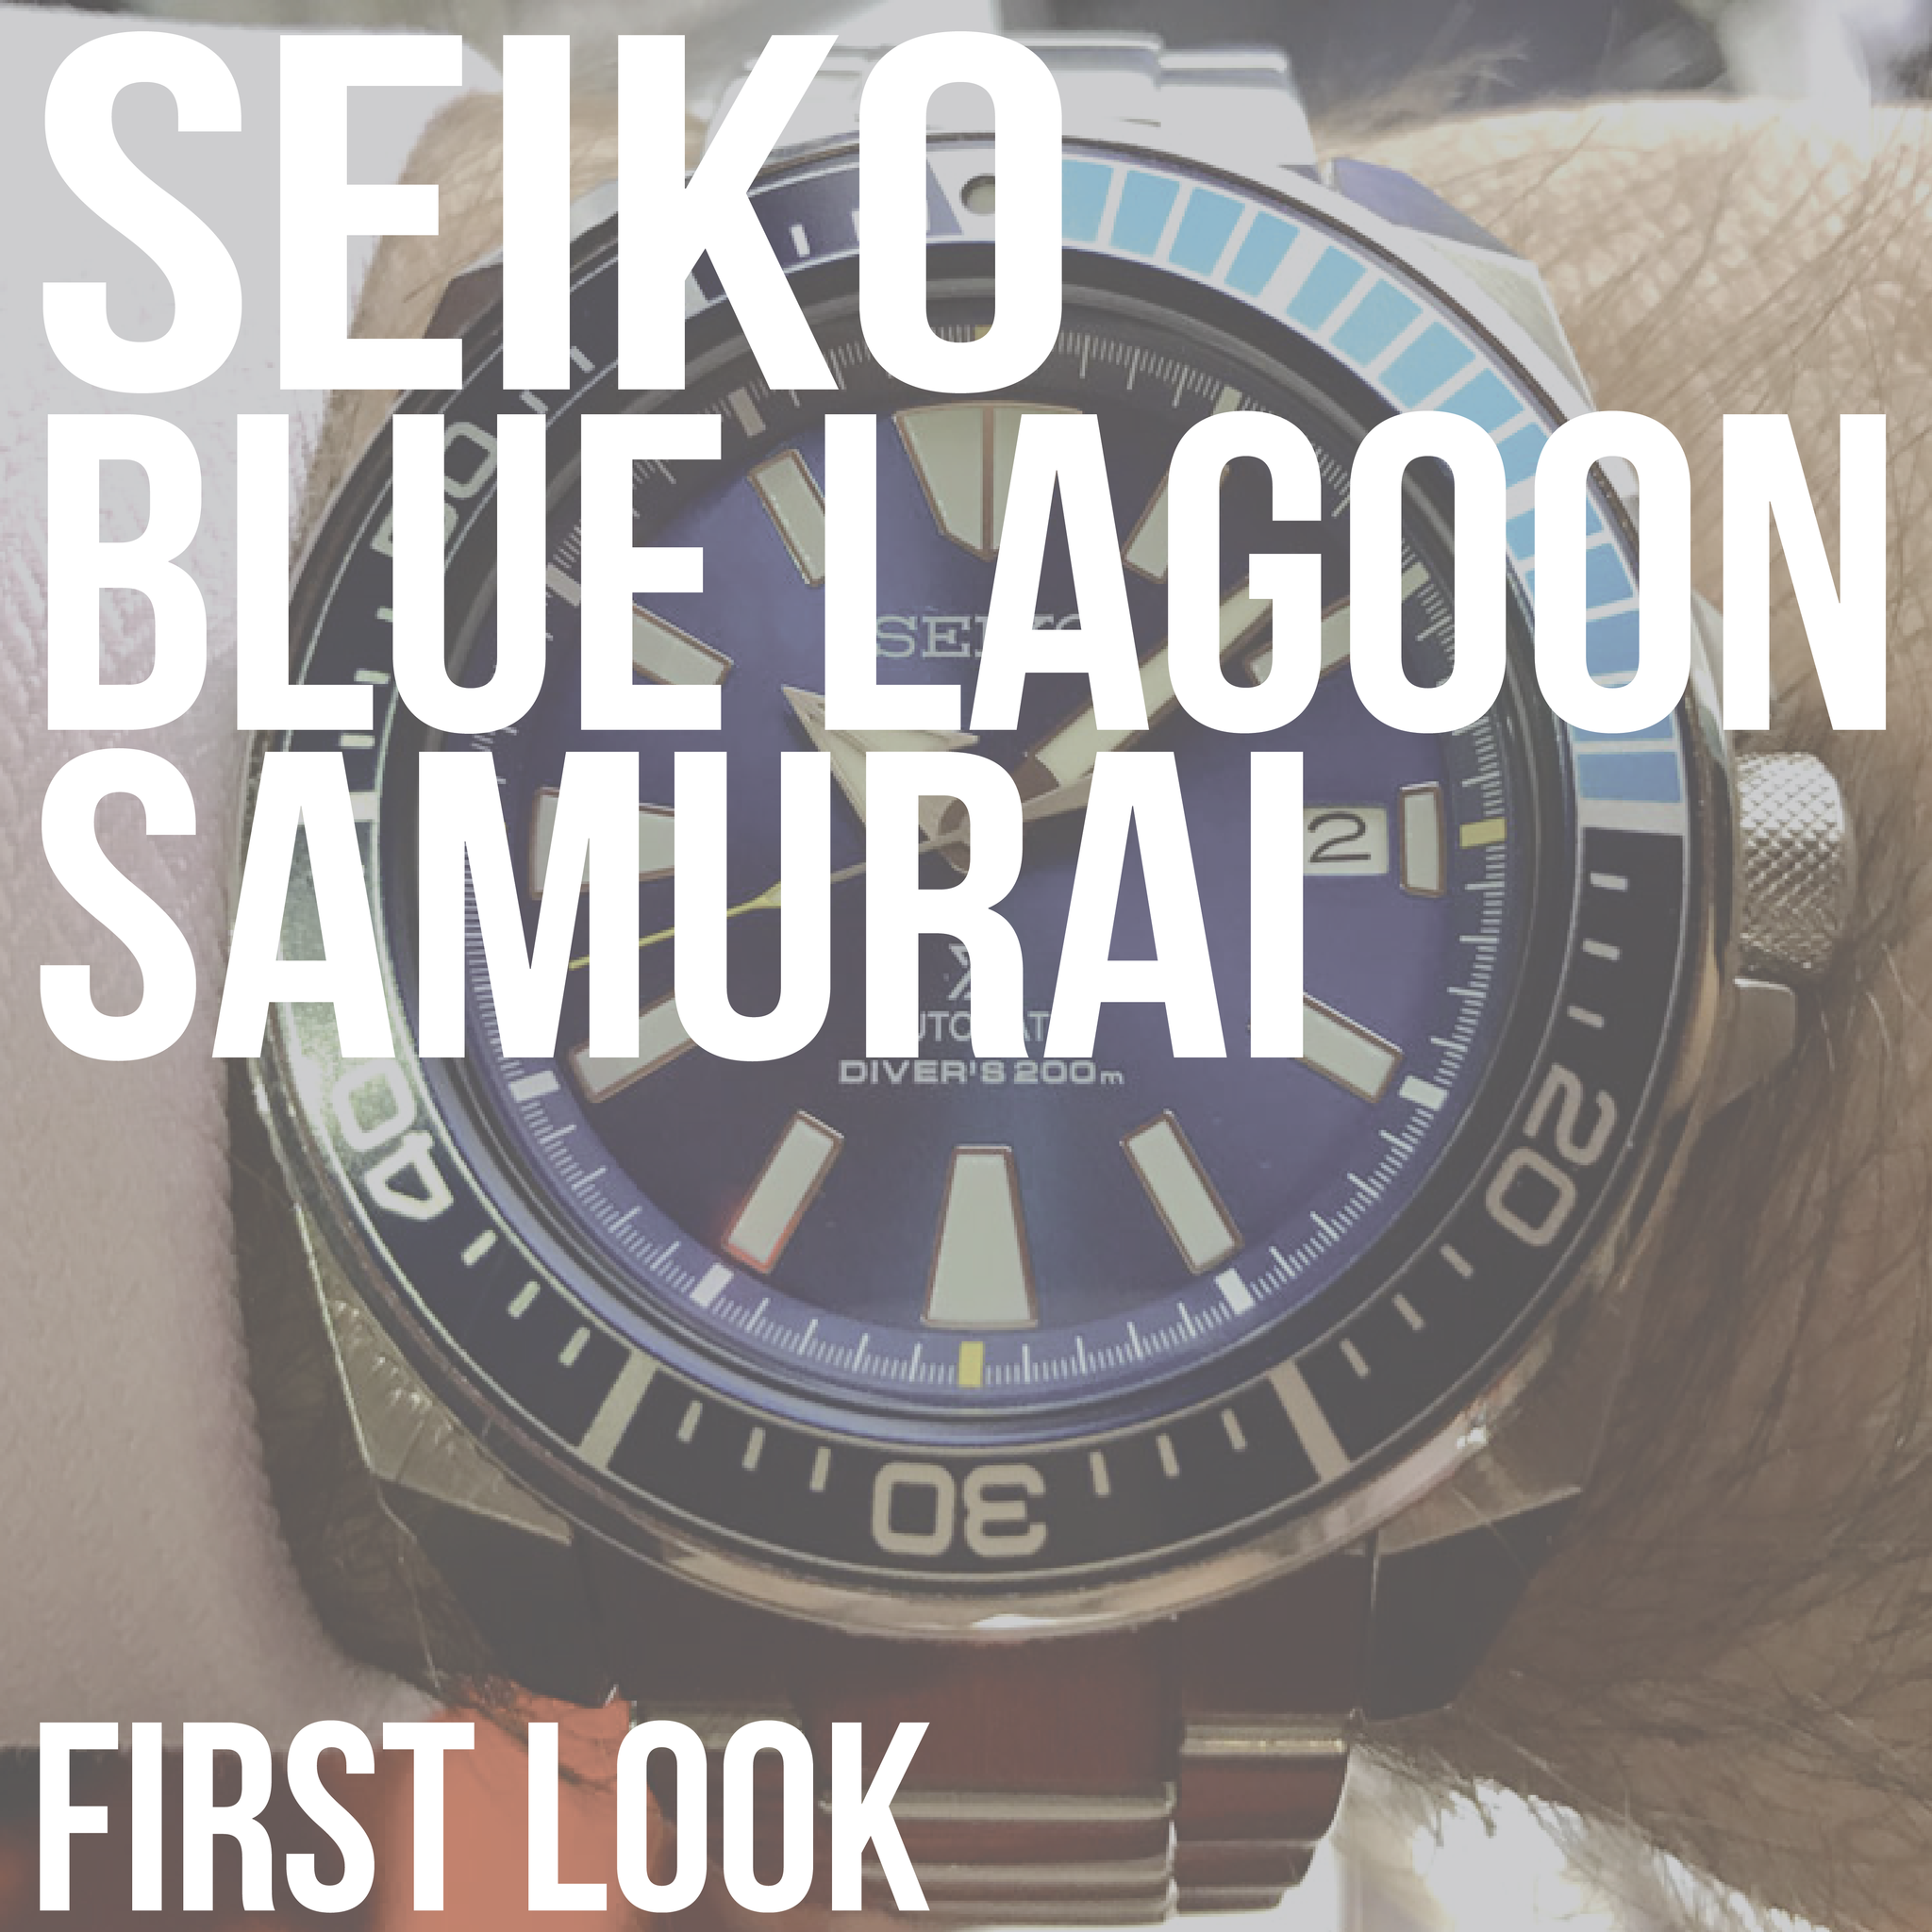 The New Seiko SRPBO9 "Blue Lagoon" Samurai